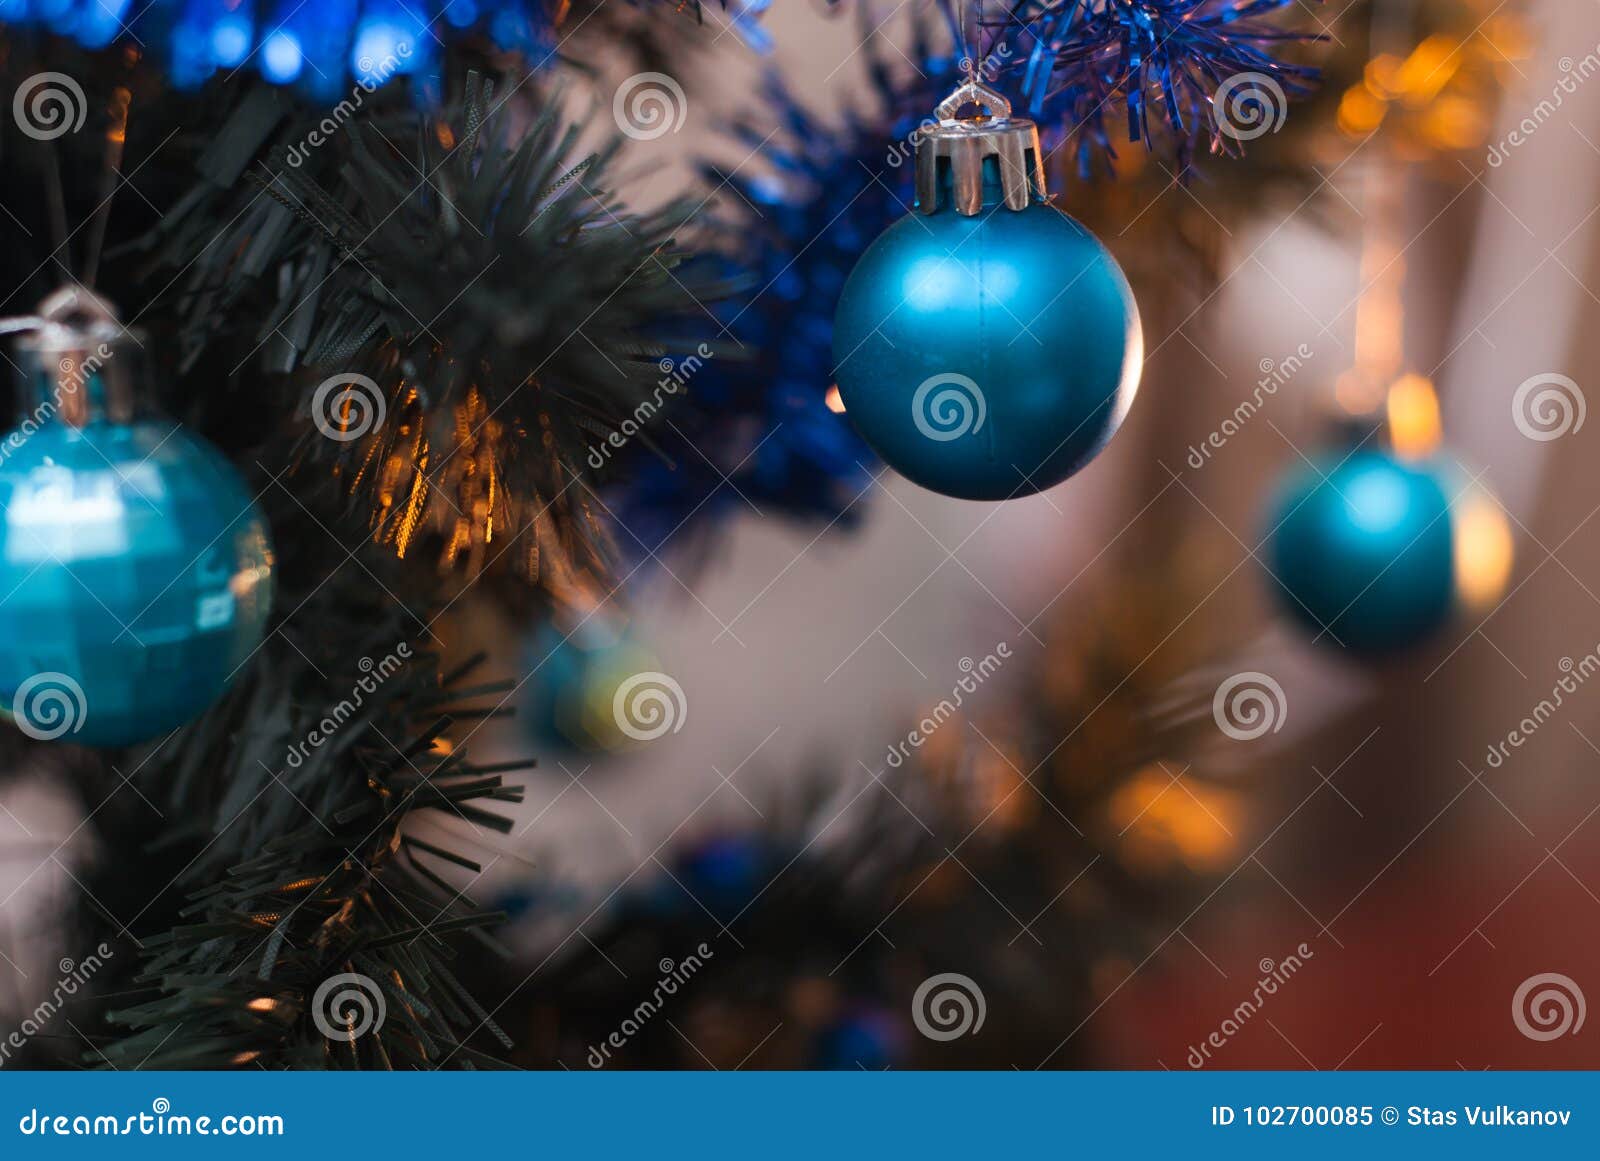 Christmas Tree on Wall Background, Yellow Lights, Stock Image - Image ...